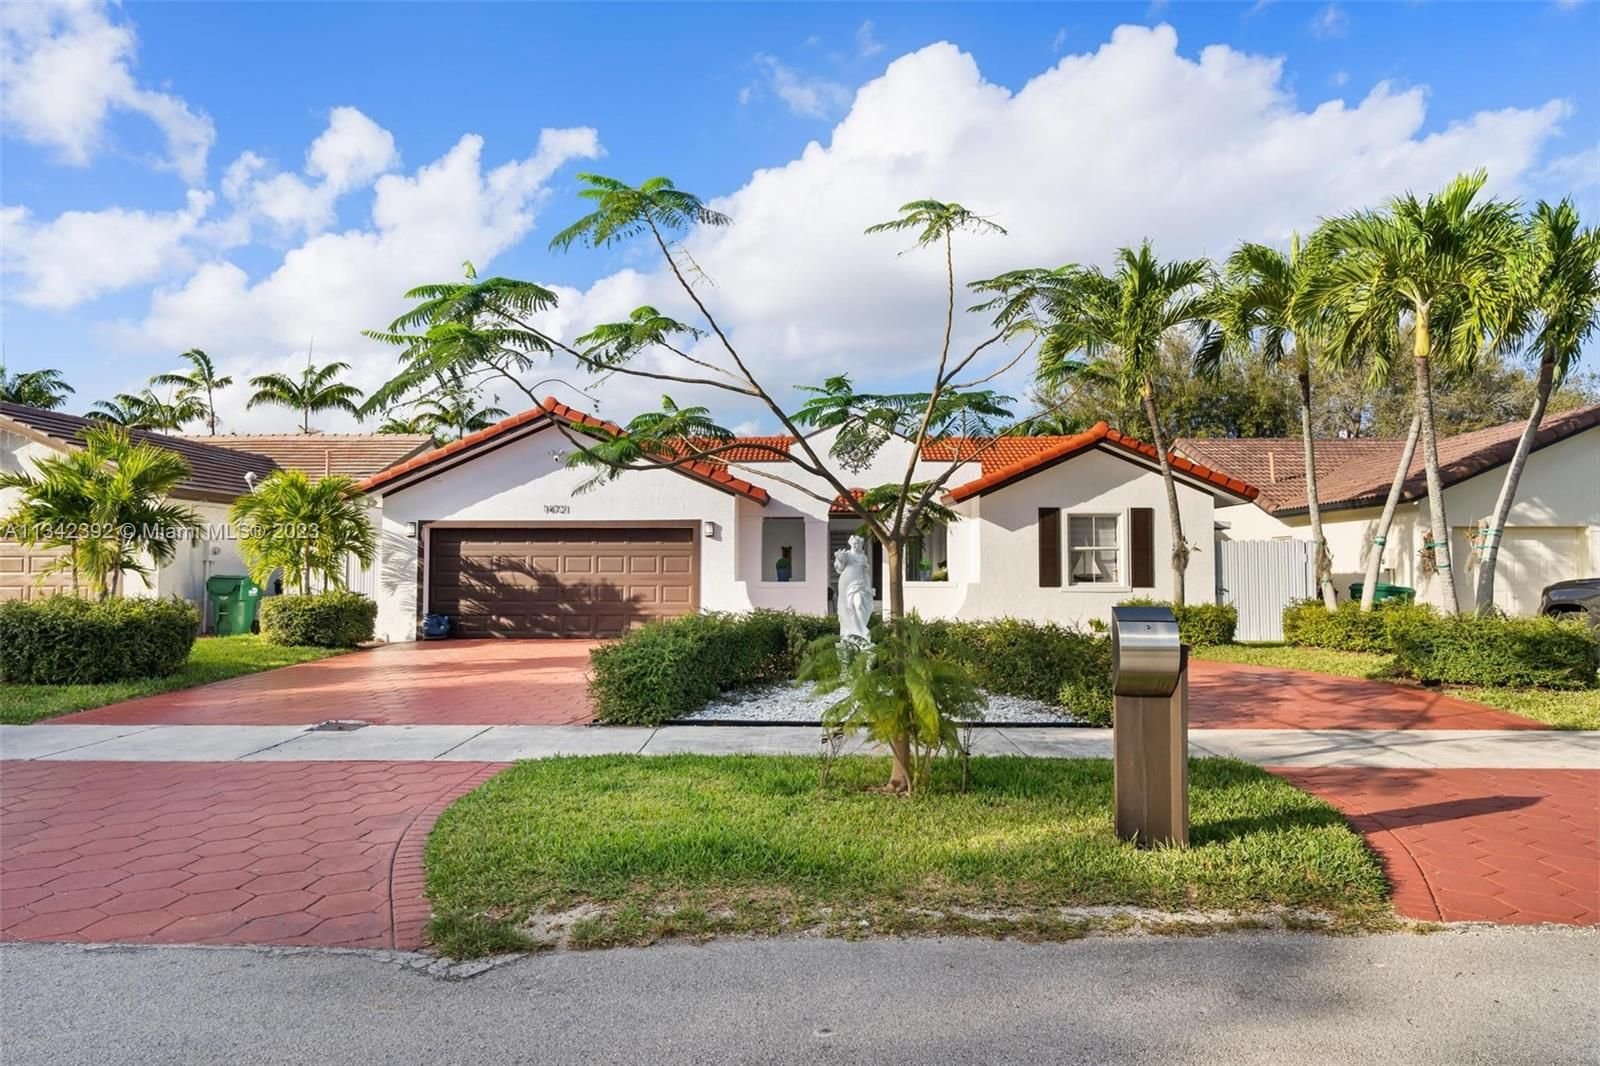 Real estate property located at 14721 sw 170 Ter, Miami-Dade County, Miami, FL